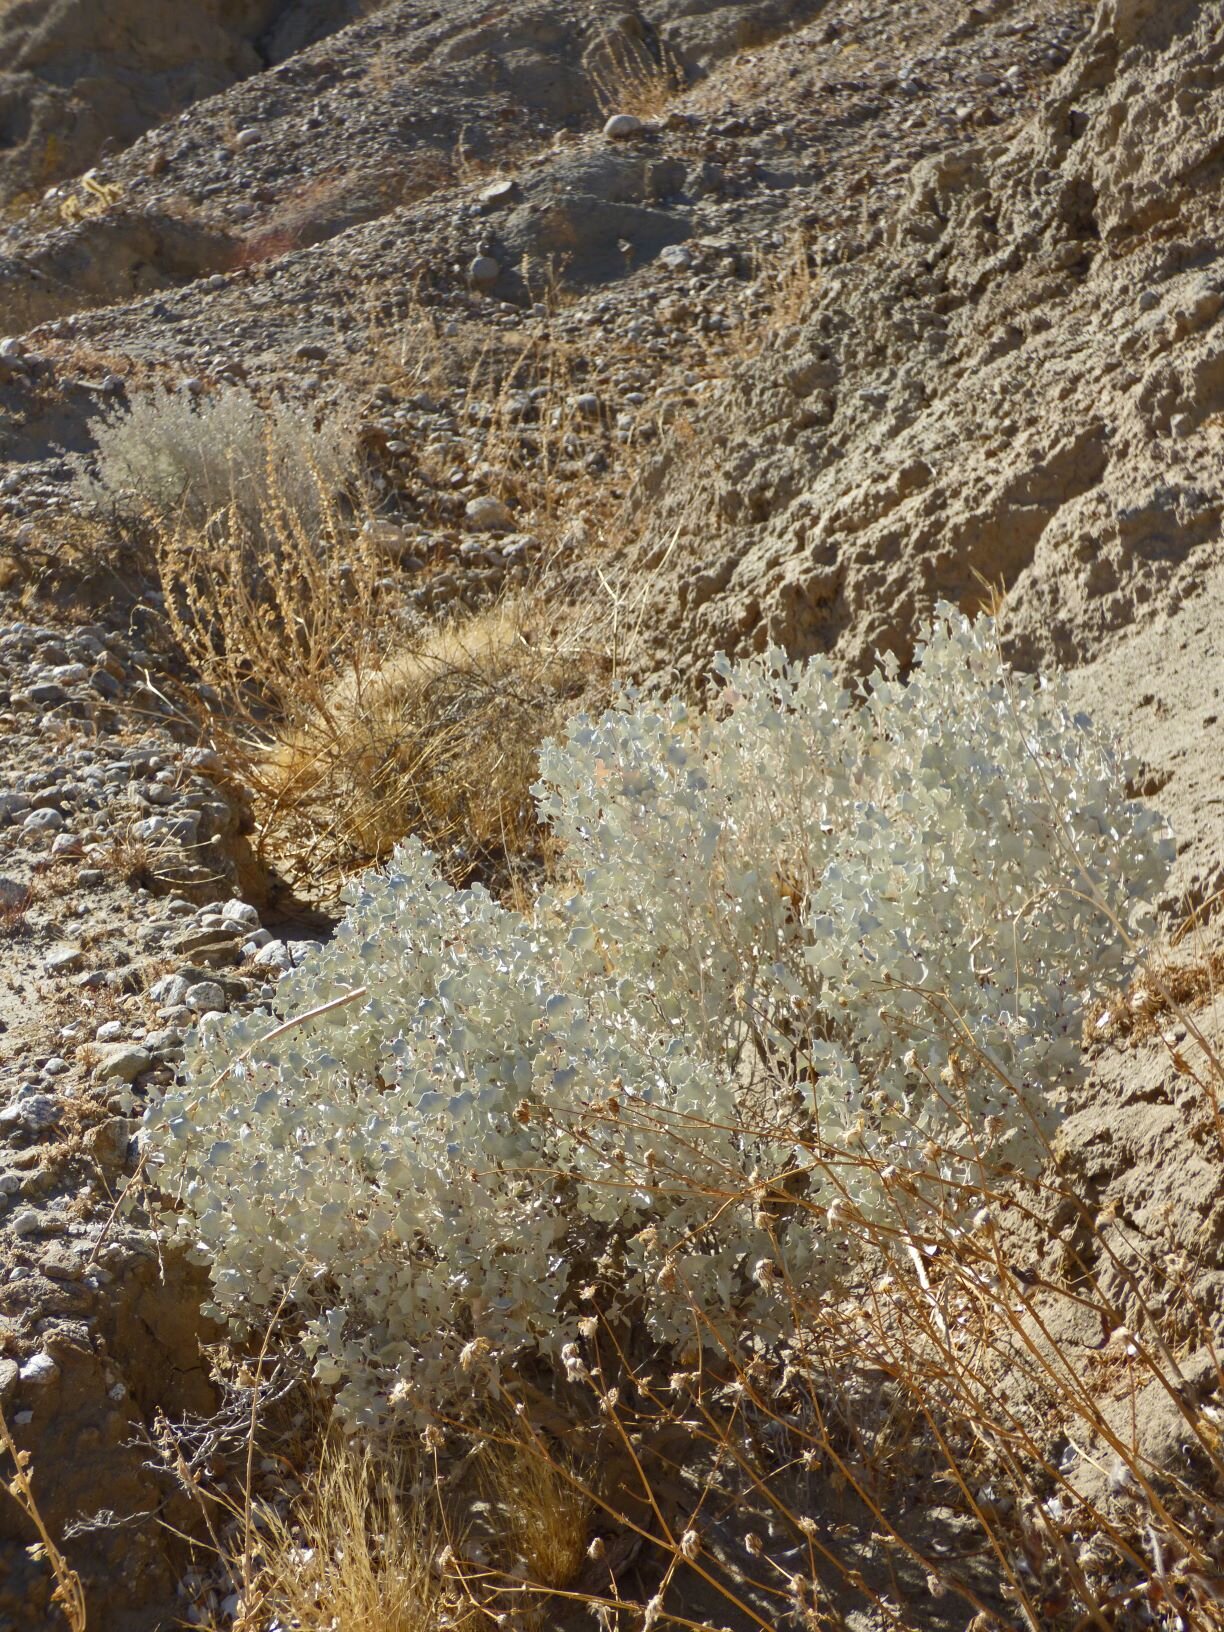 Many of the plants without flowers were still attractive: Desert Saltbush (Atriplex polycarpa),